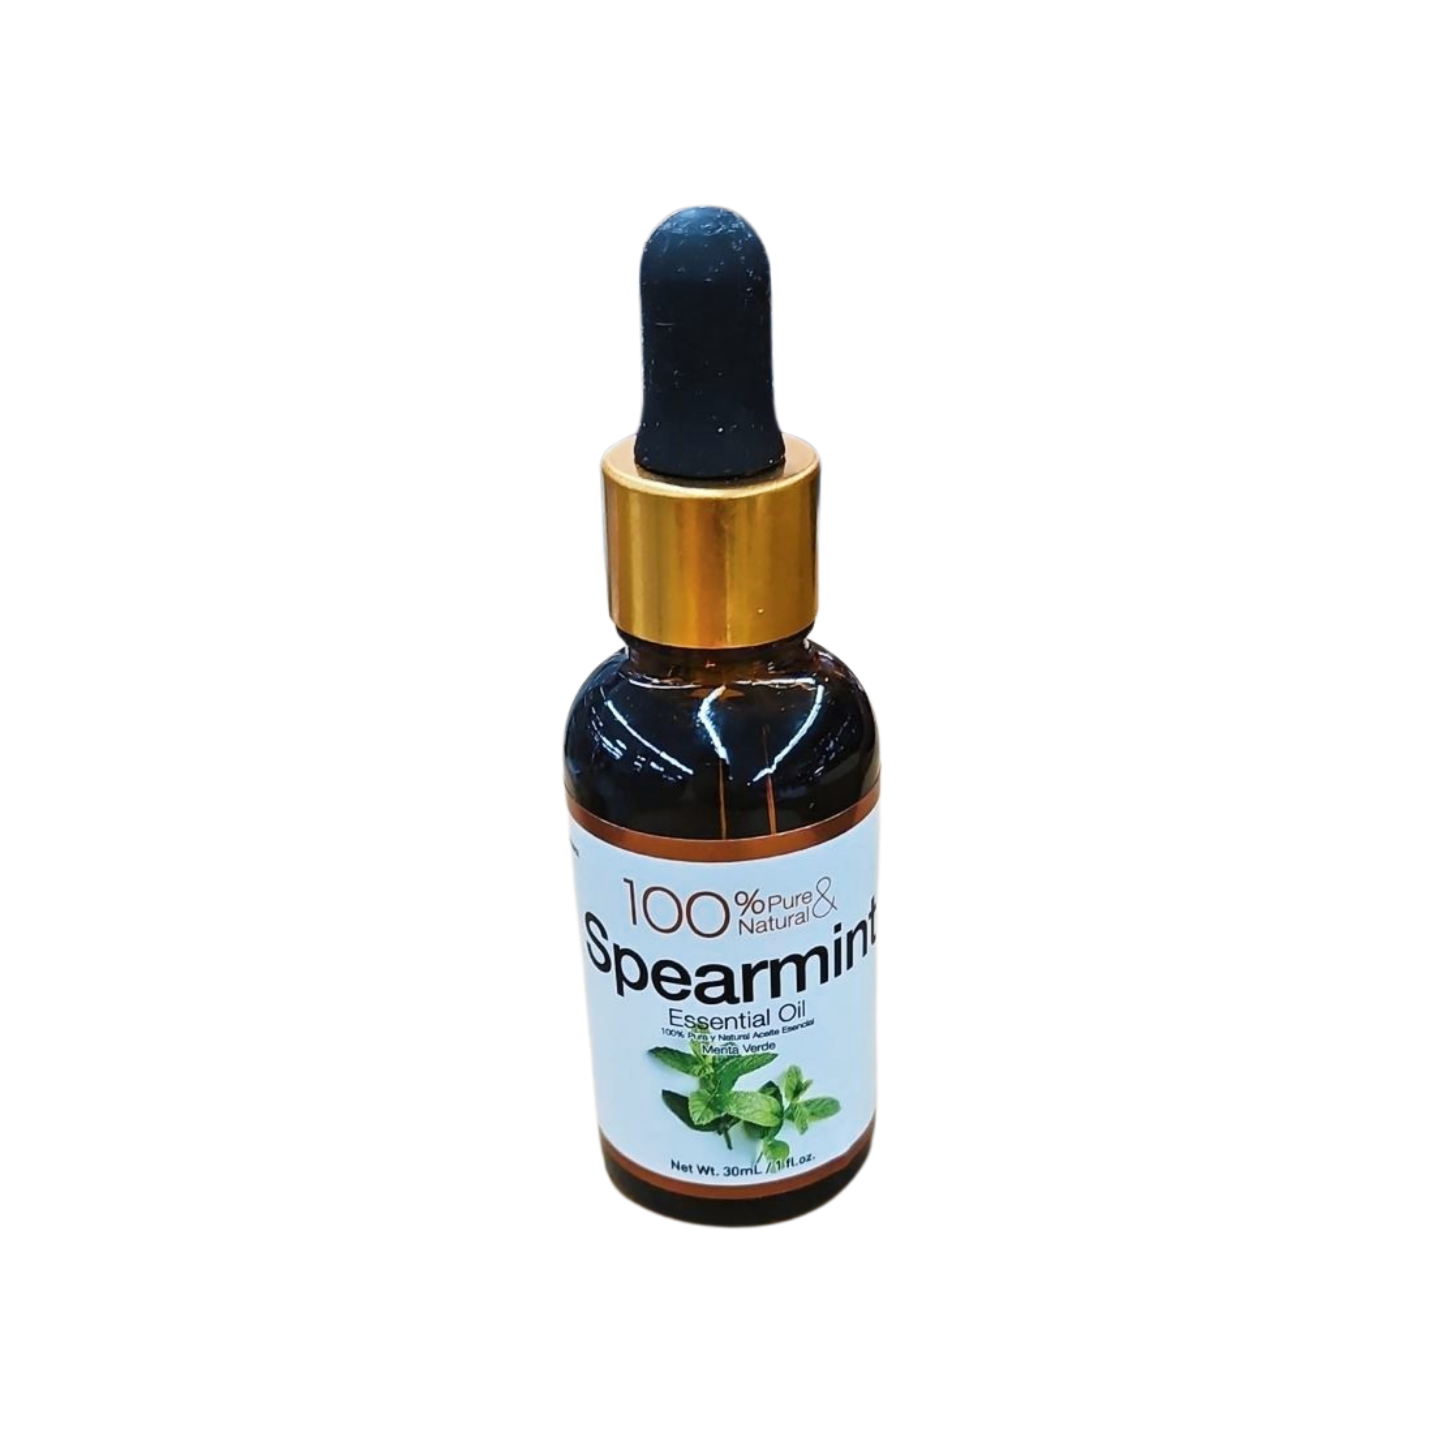 100% pure spearmint oil